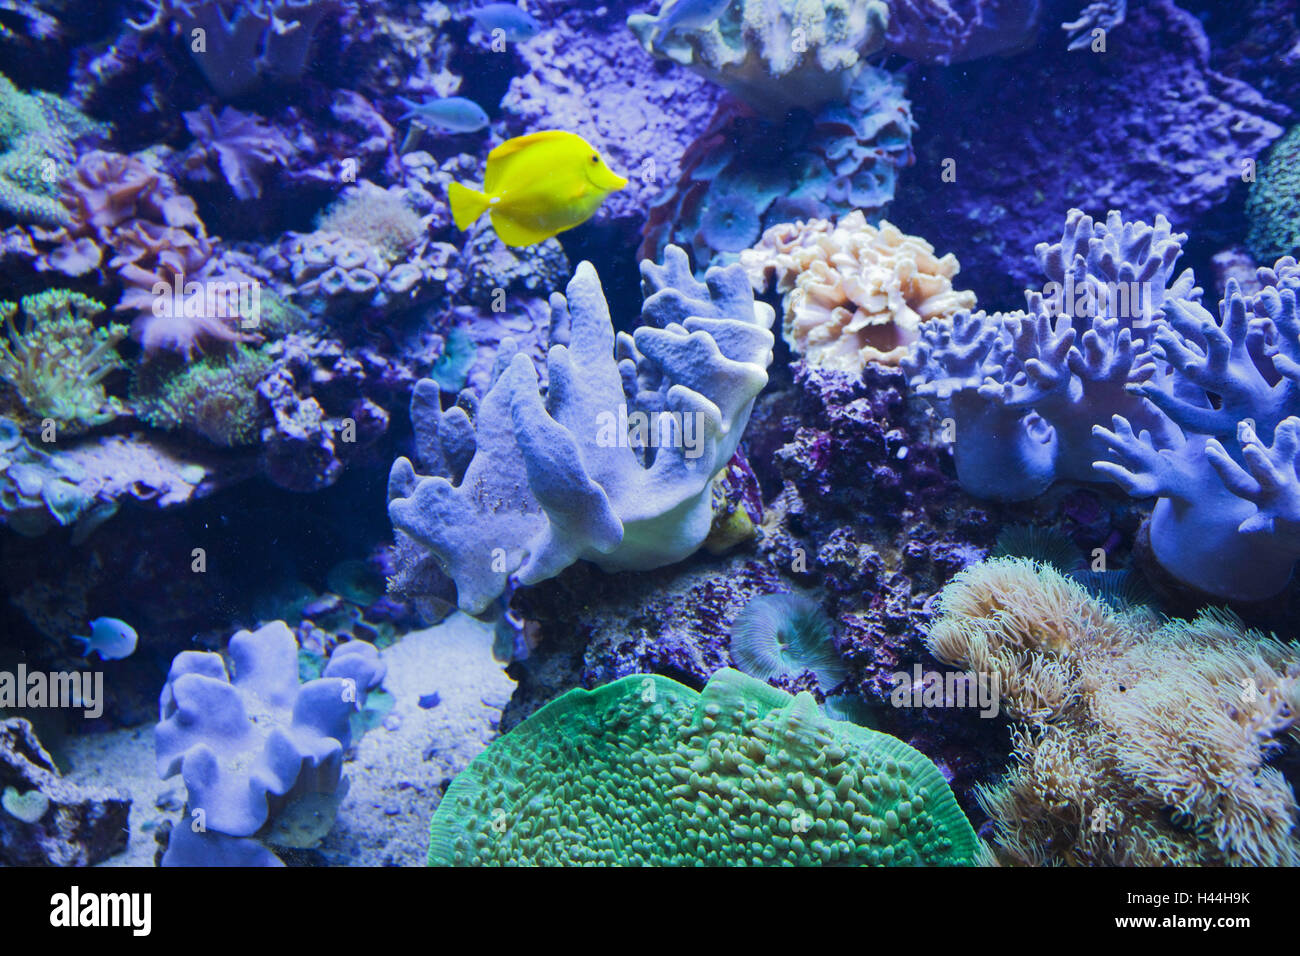 Spain, Catalonia, Barcelona, aquarium, lemon fin surgeonfish, zebrasoma flavescens, Stock Photo